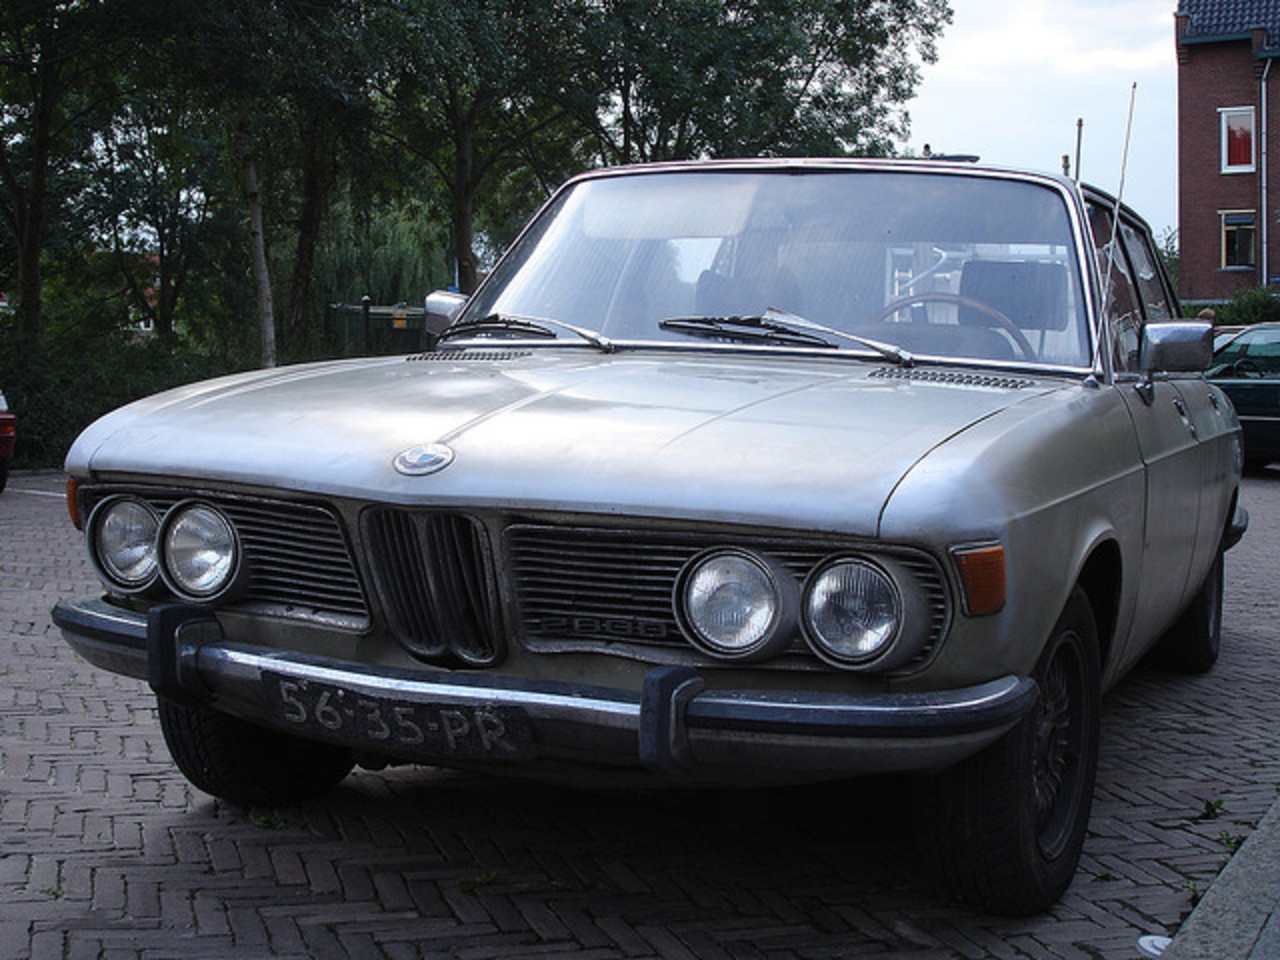 BMW 2800 | Flickr - Photo Sharing!